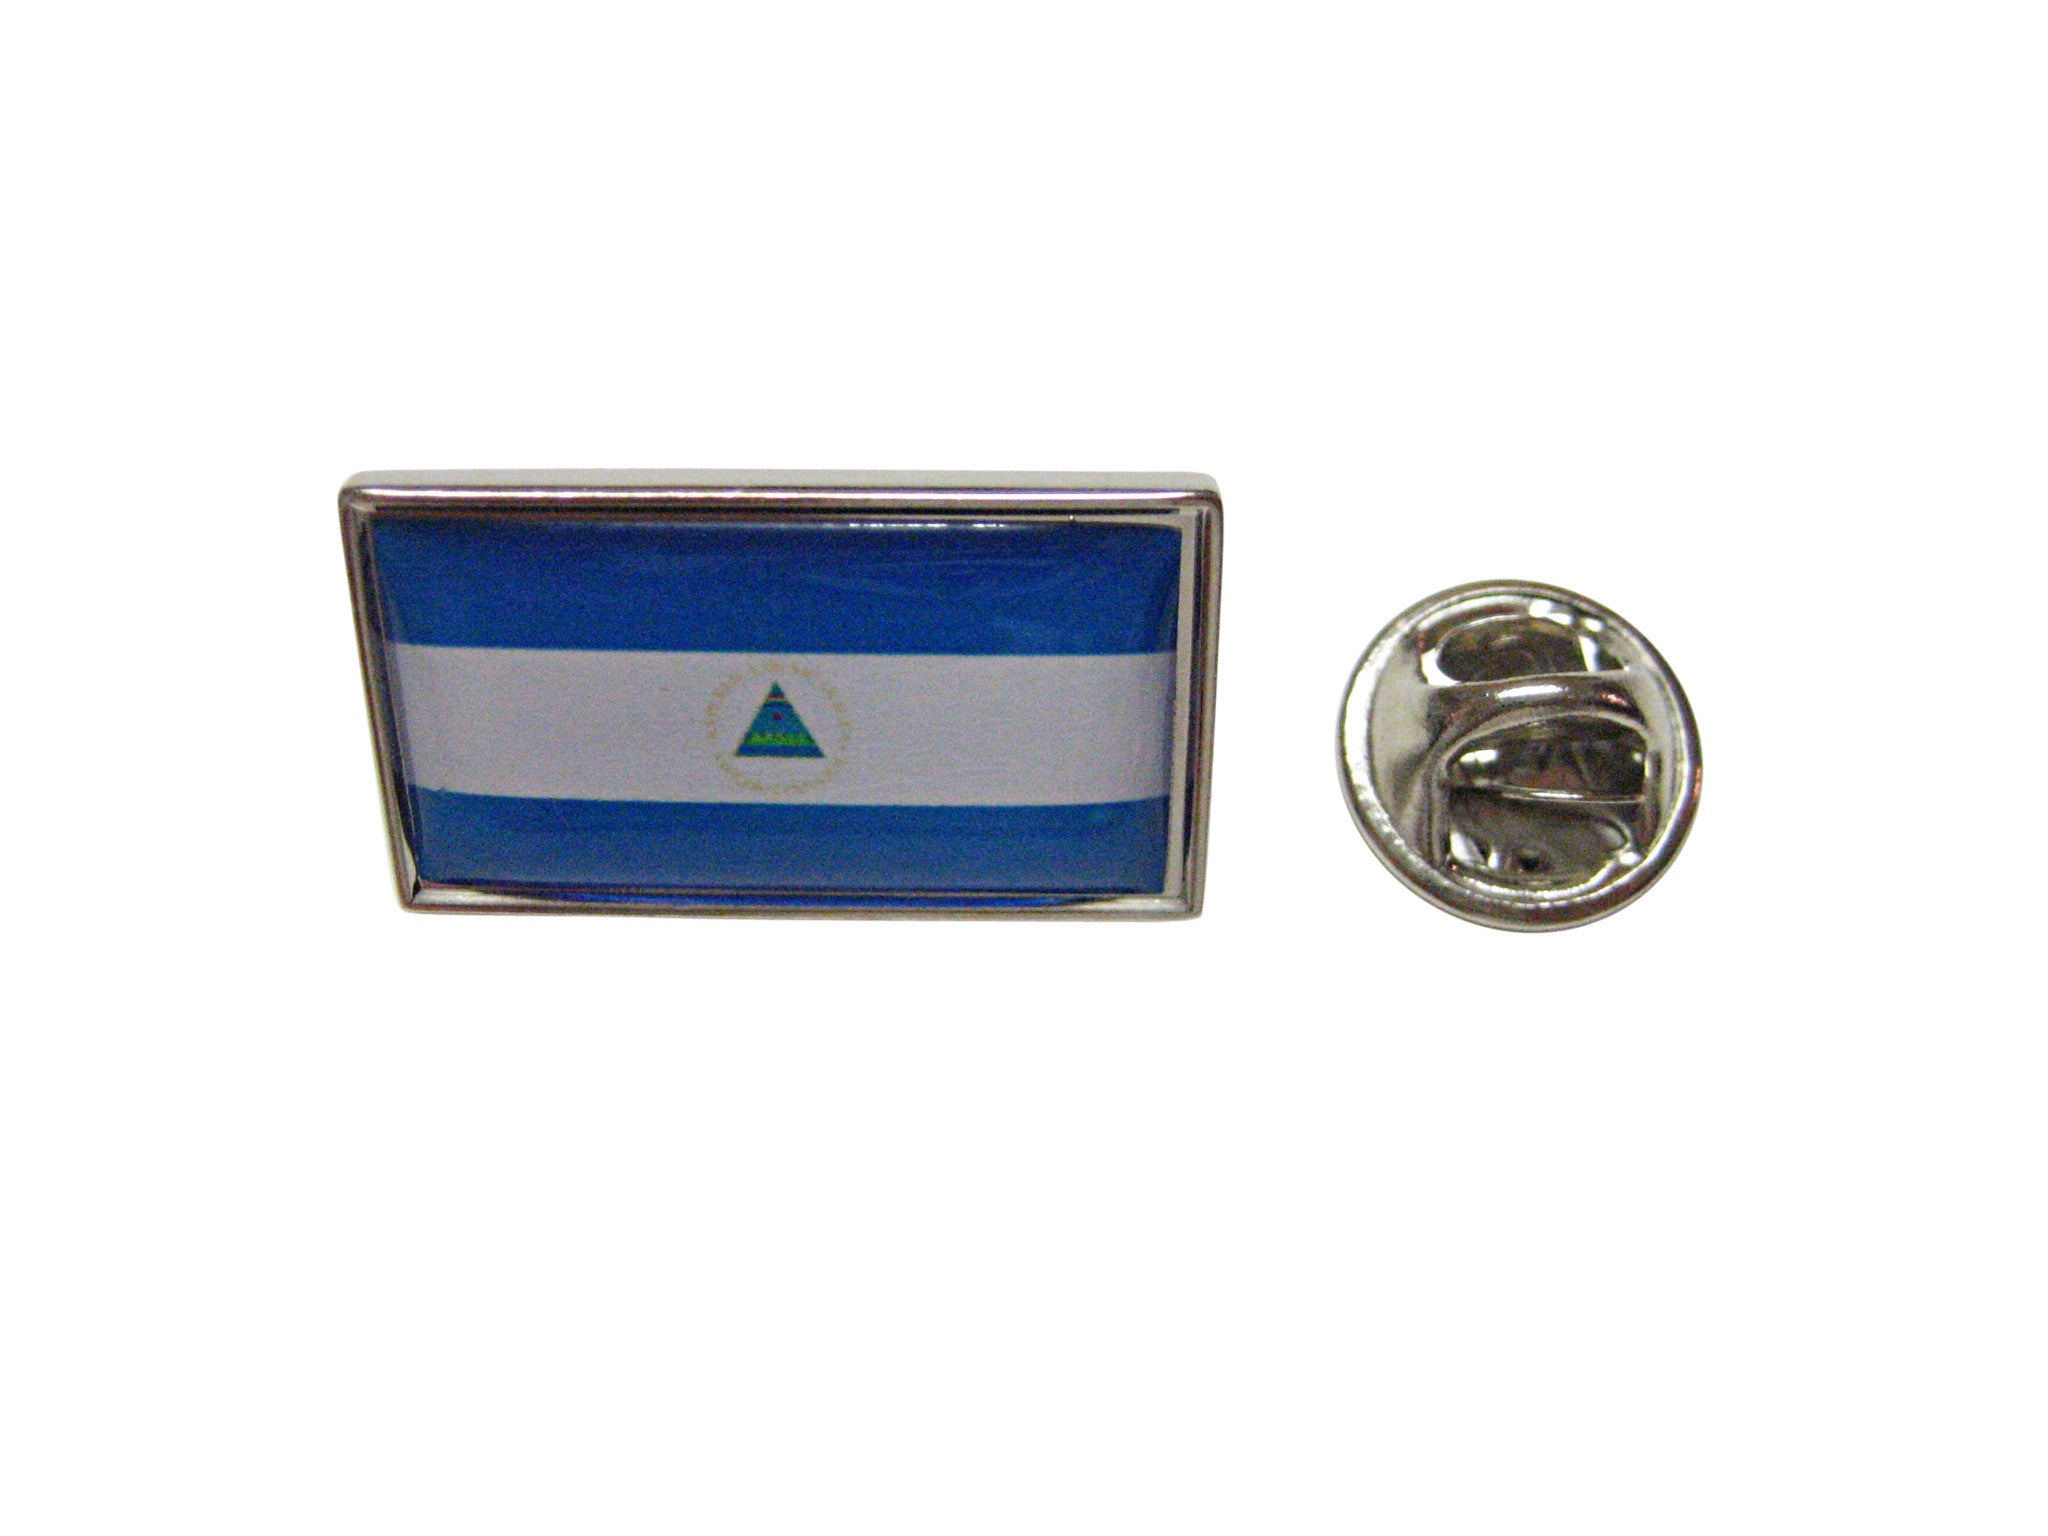 Nicaragua Flag Lapel Pin